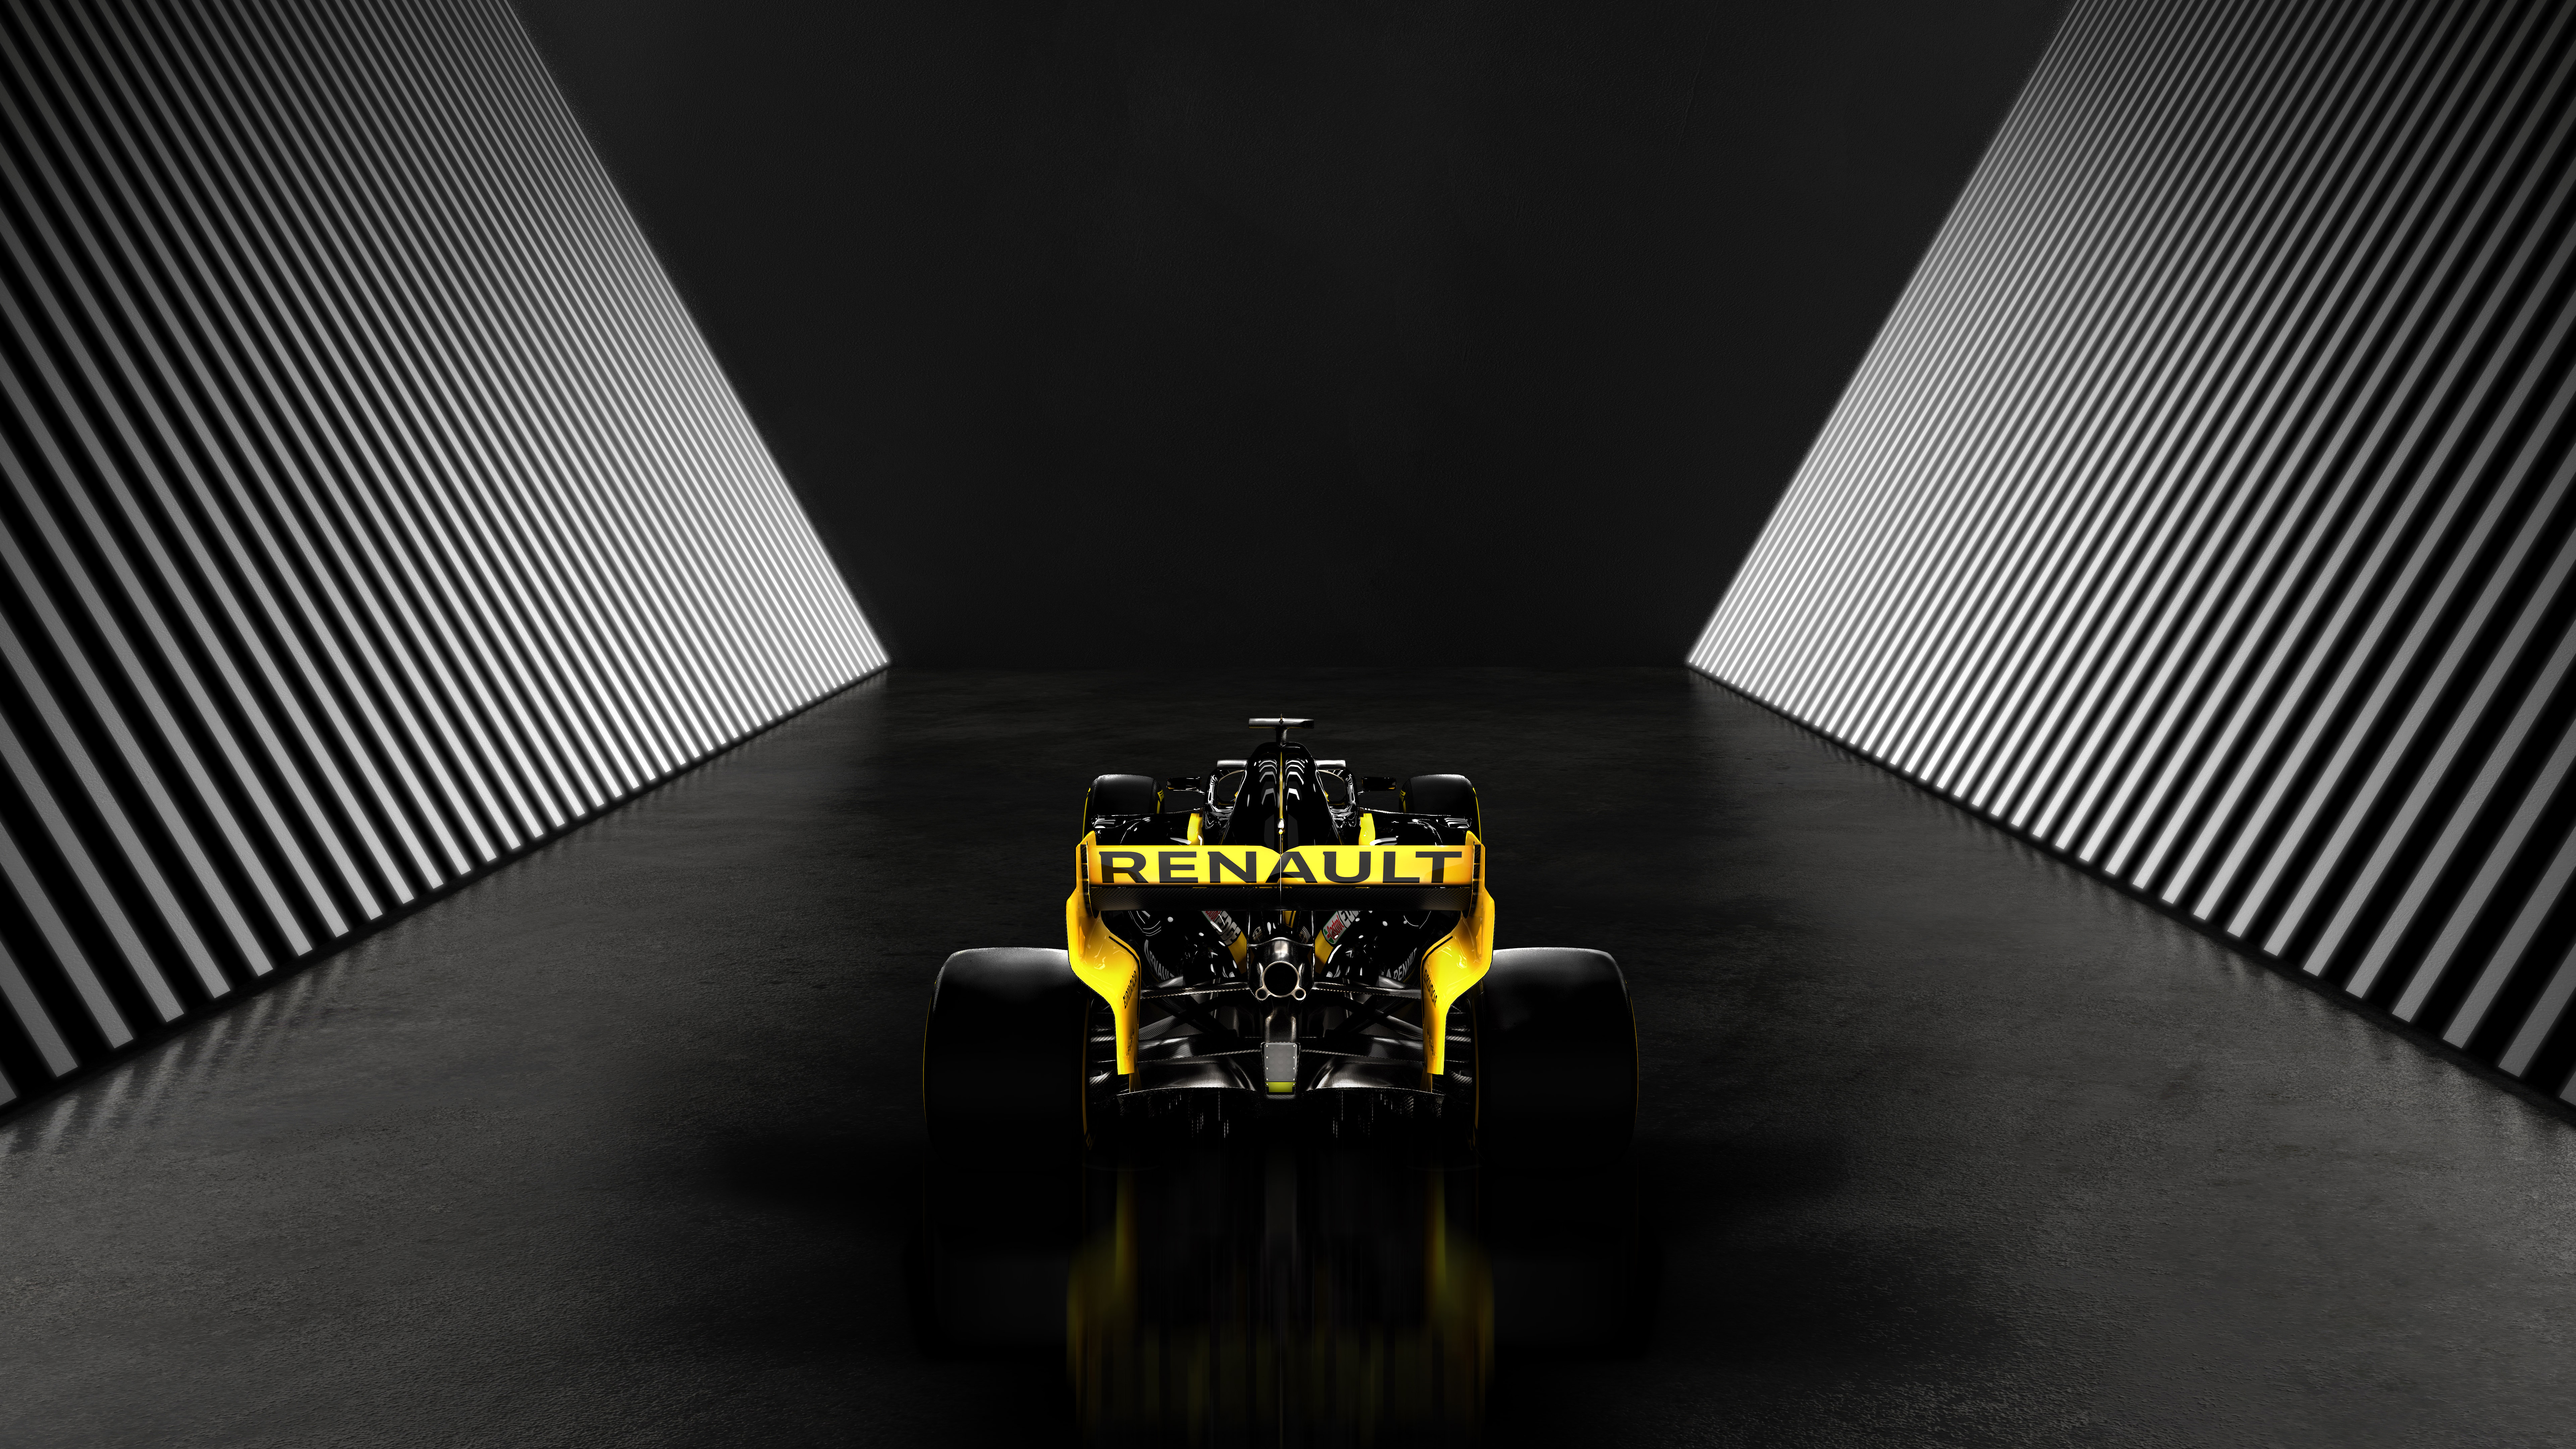 Renault R S 19 Formula 1 Car Yellow Cars 2019 Year Renault Race Cars Vehicle Racing Formula Cars Rea 7680x4320